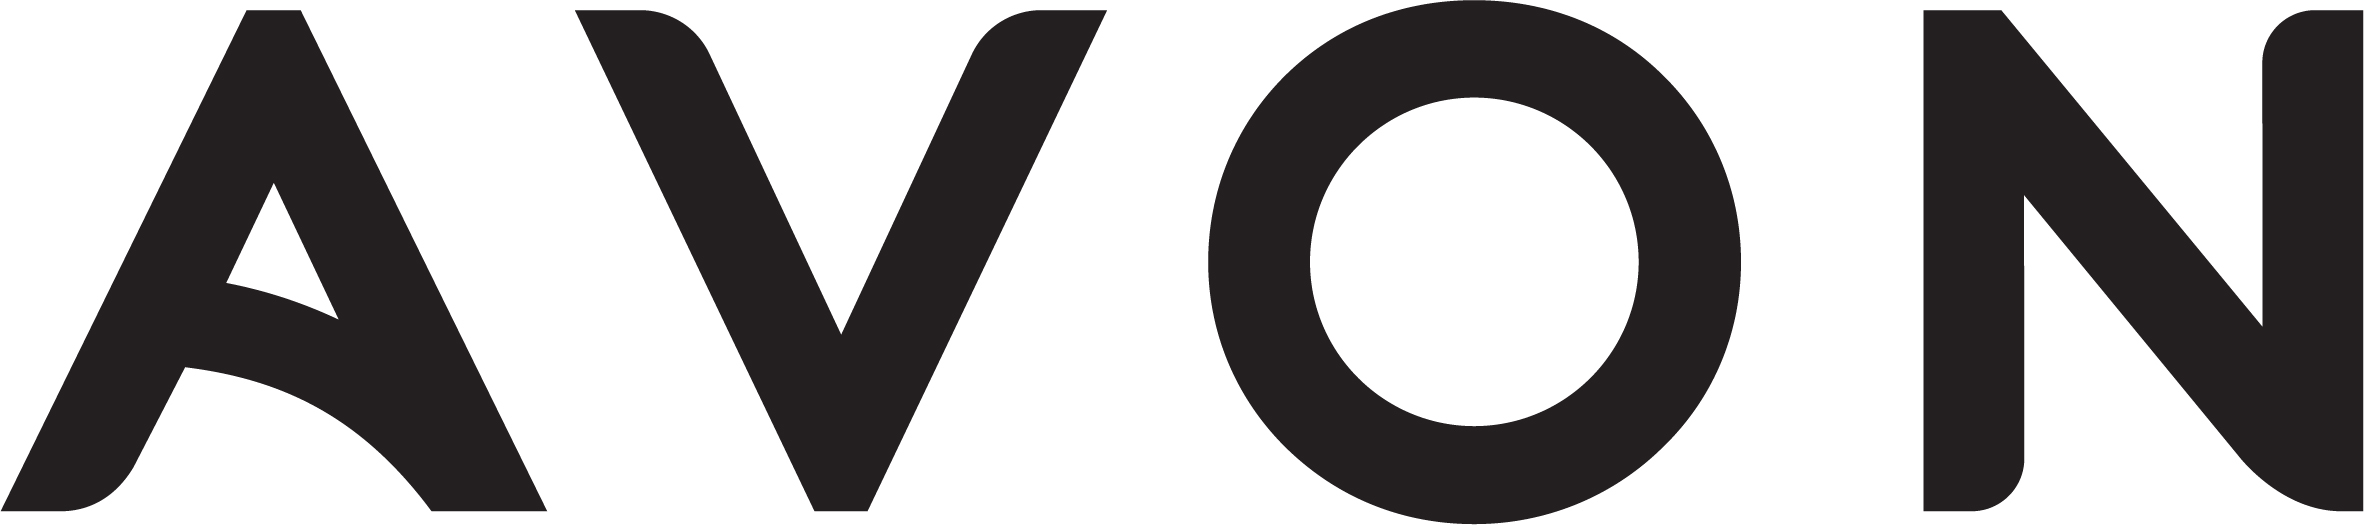 Avon Cosmetics_logo